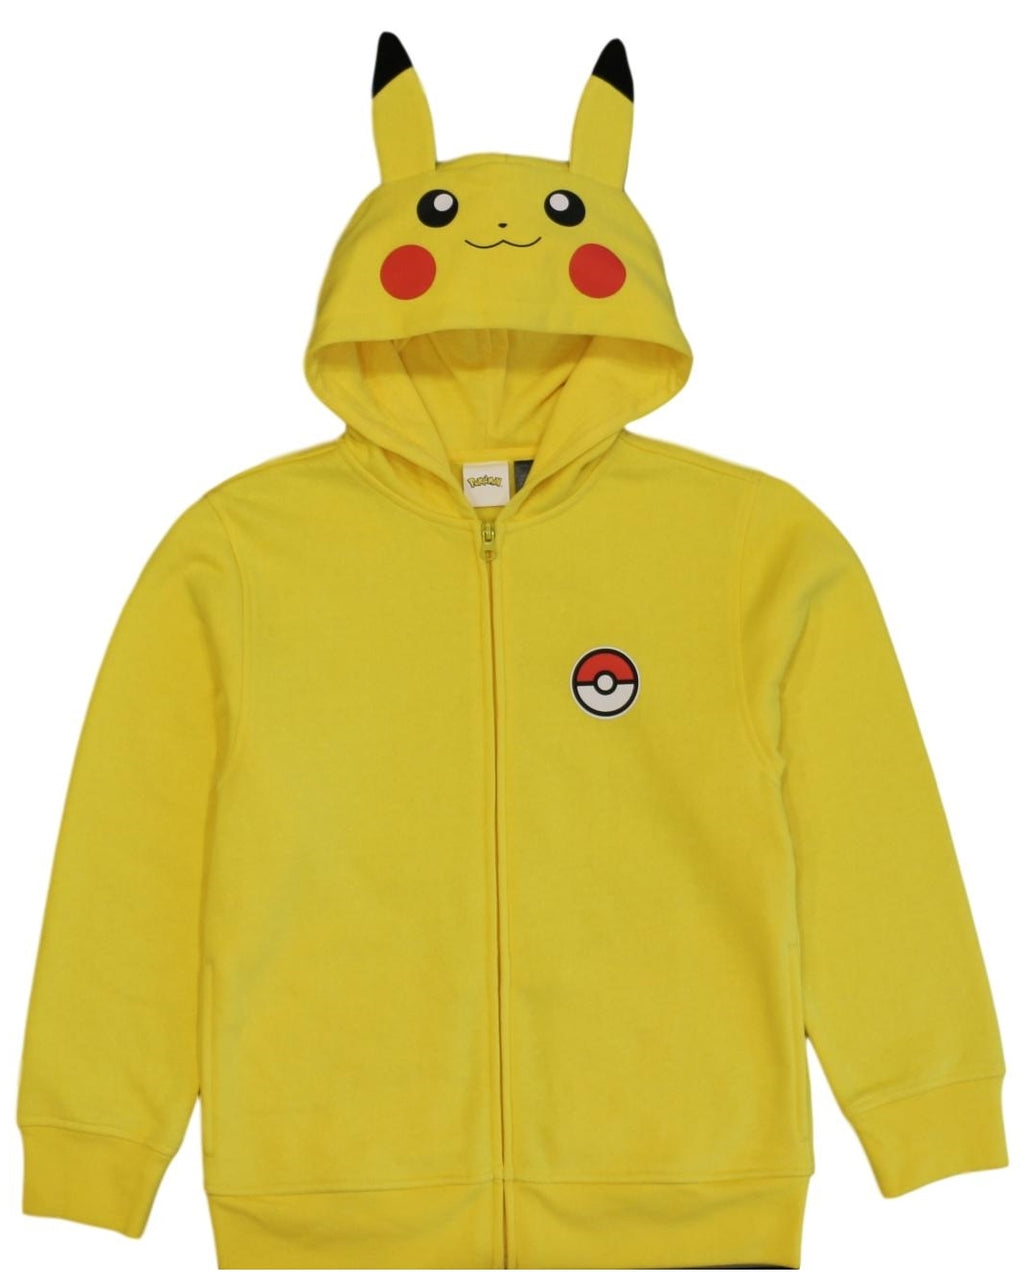 Pokemon Boys 4-16 Pikachu Costume Hoodie